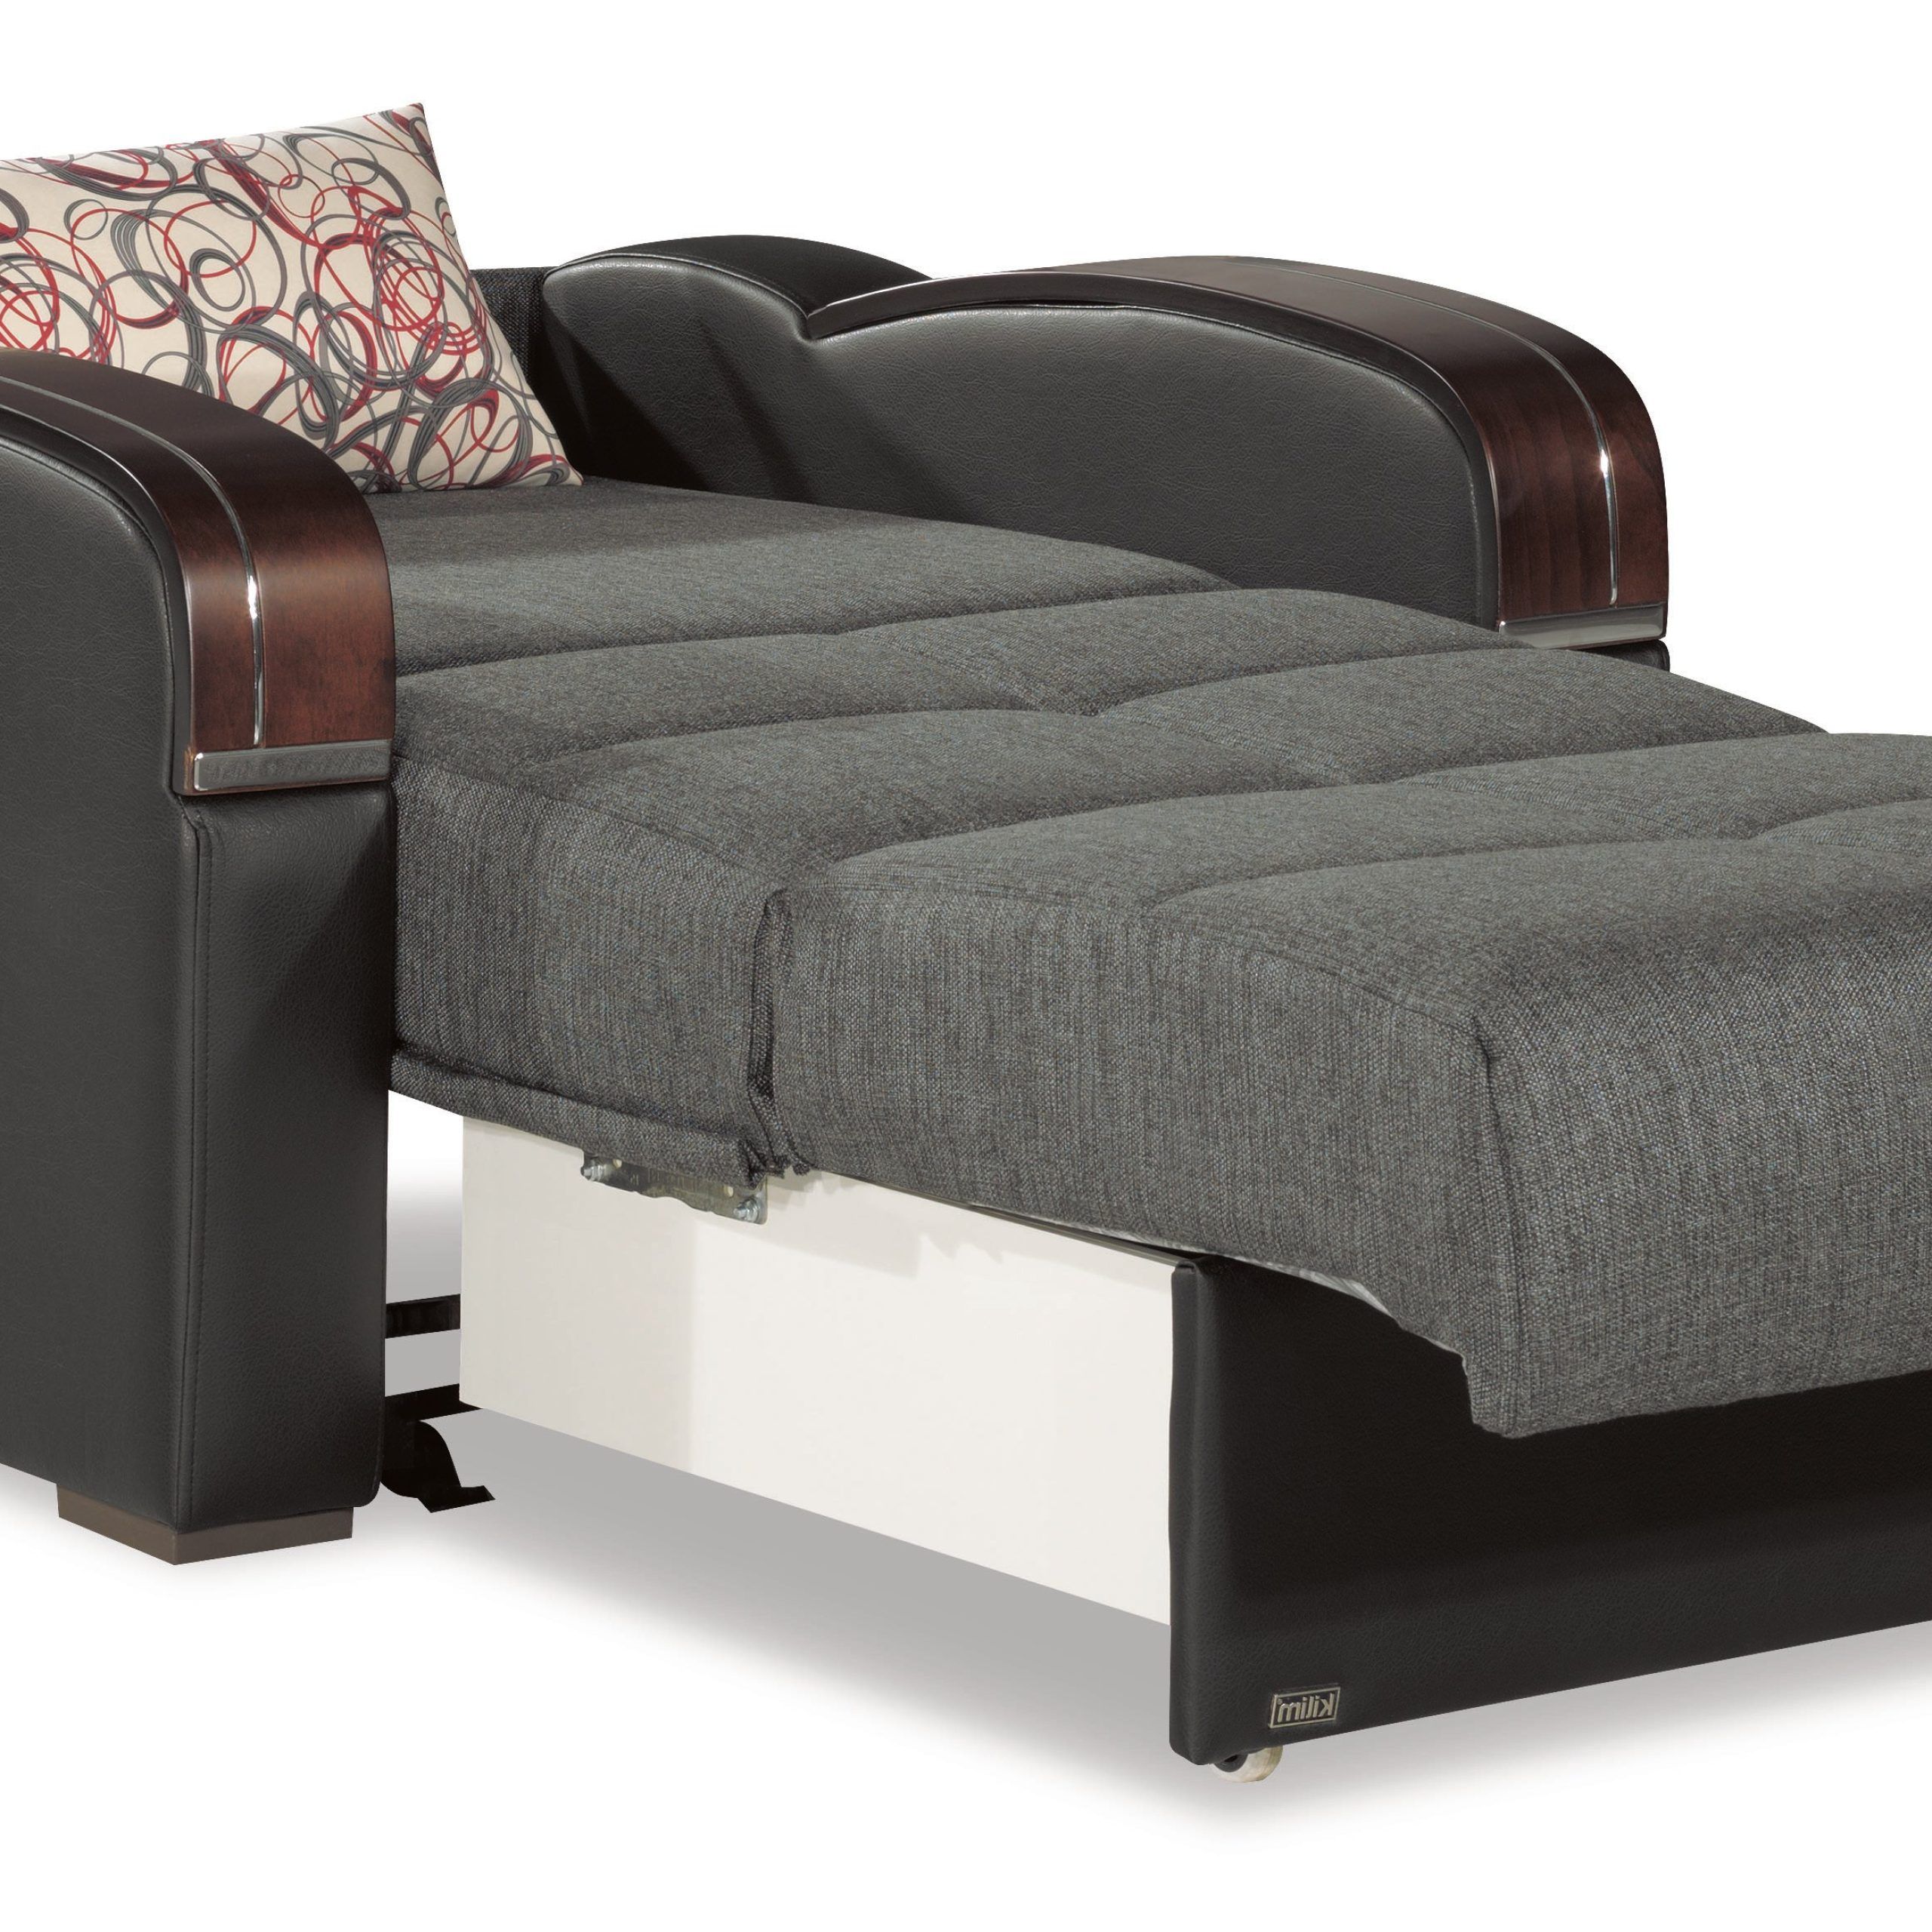 Sleep Plus Gray Convertible Chair Bedcasamode For Convertible Light Gray Chair Beds (View 4 of 20)